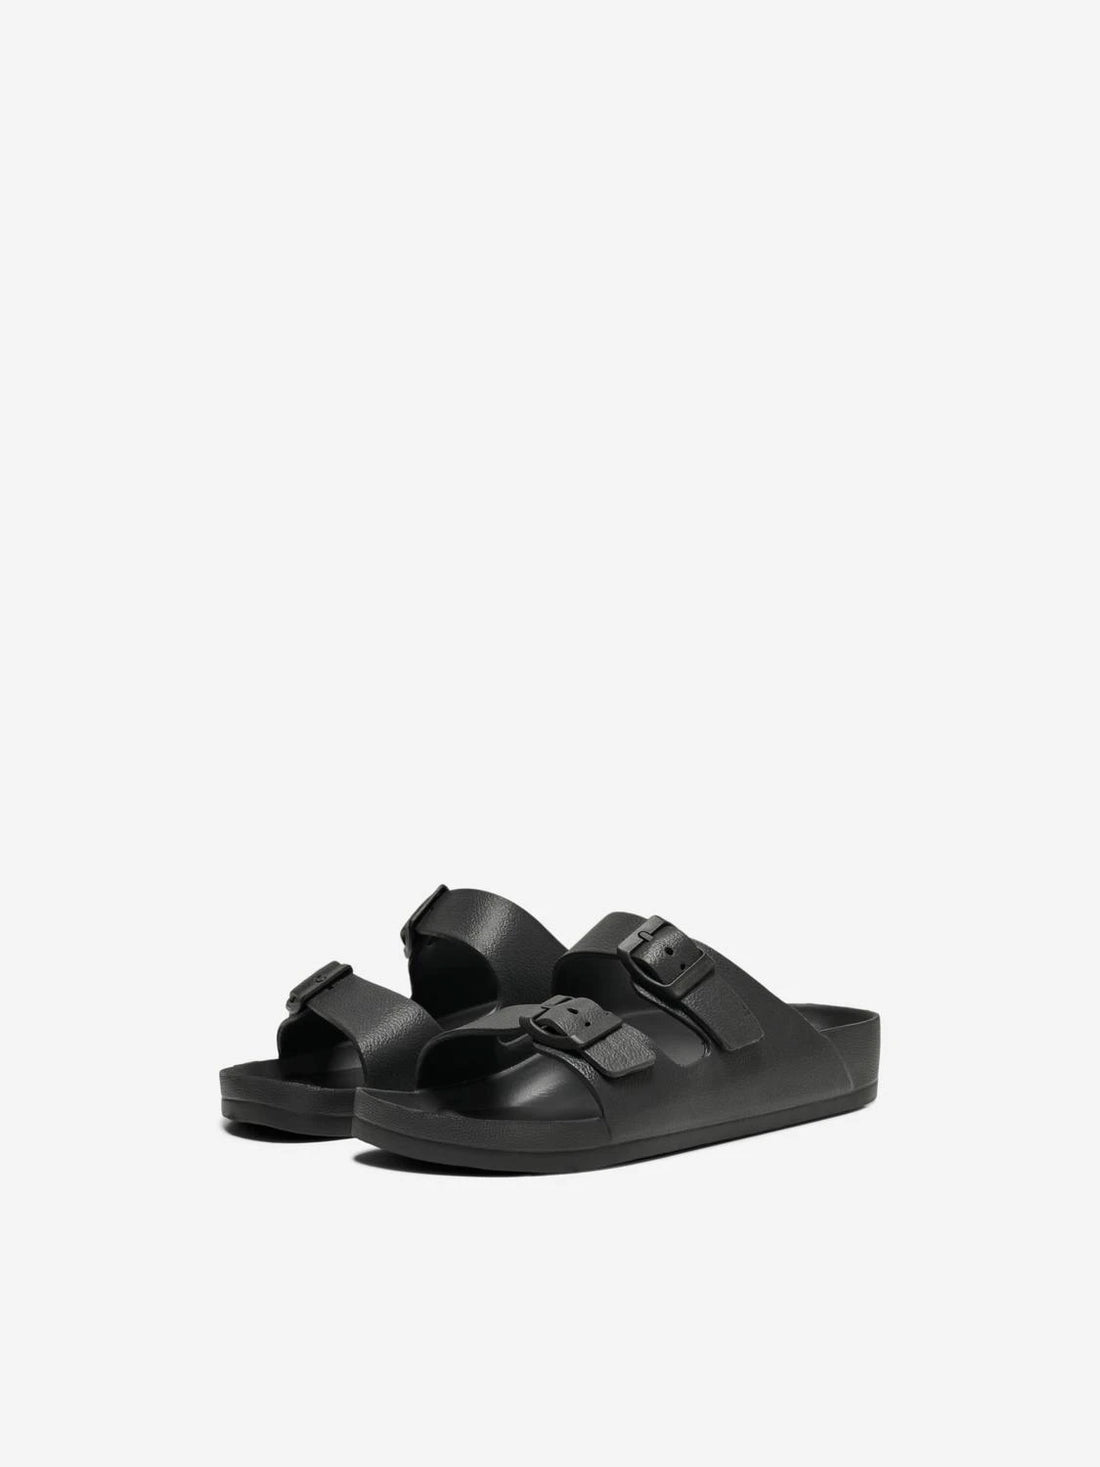 CRISTY Slide Sandal in Black